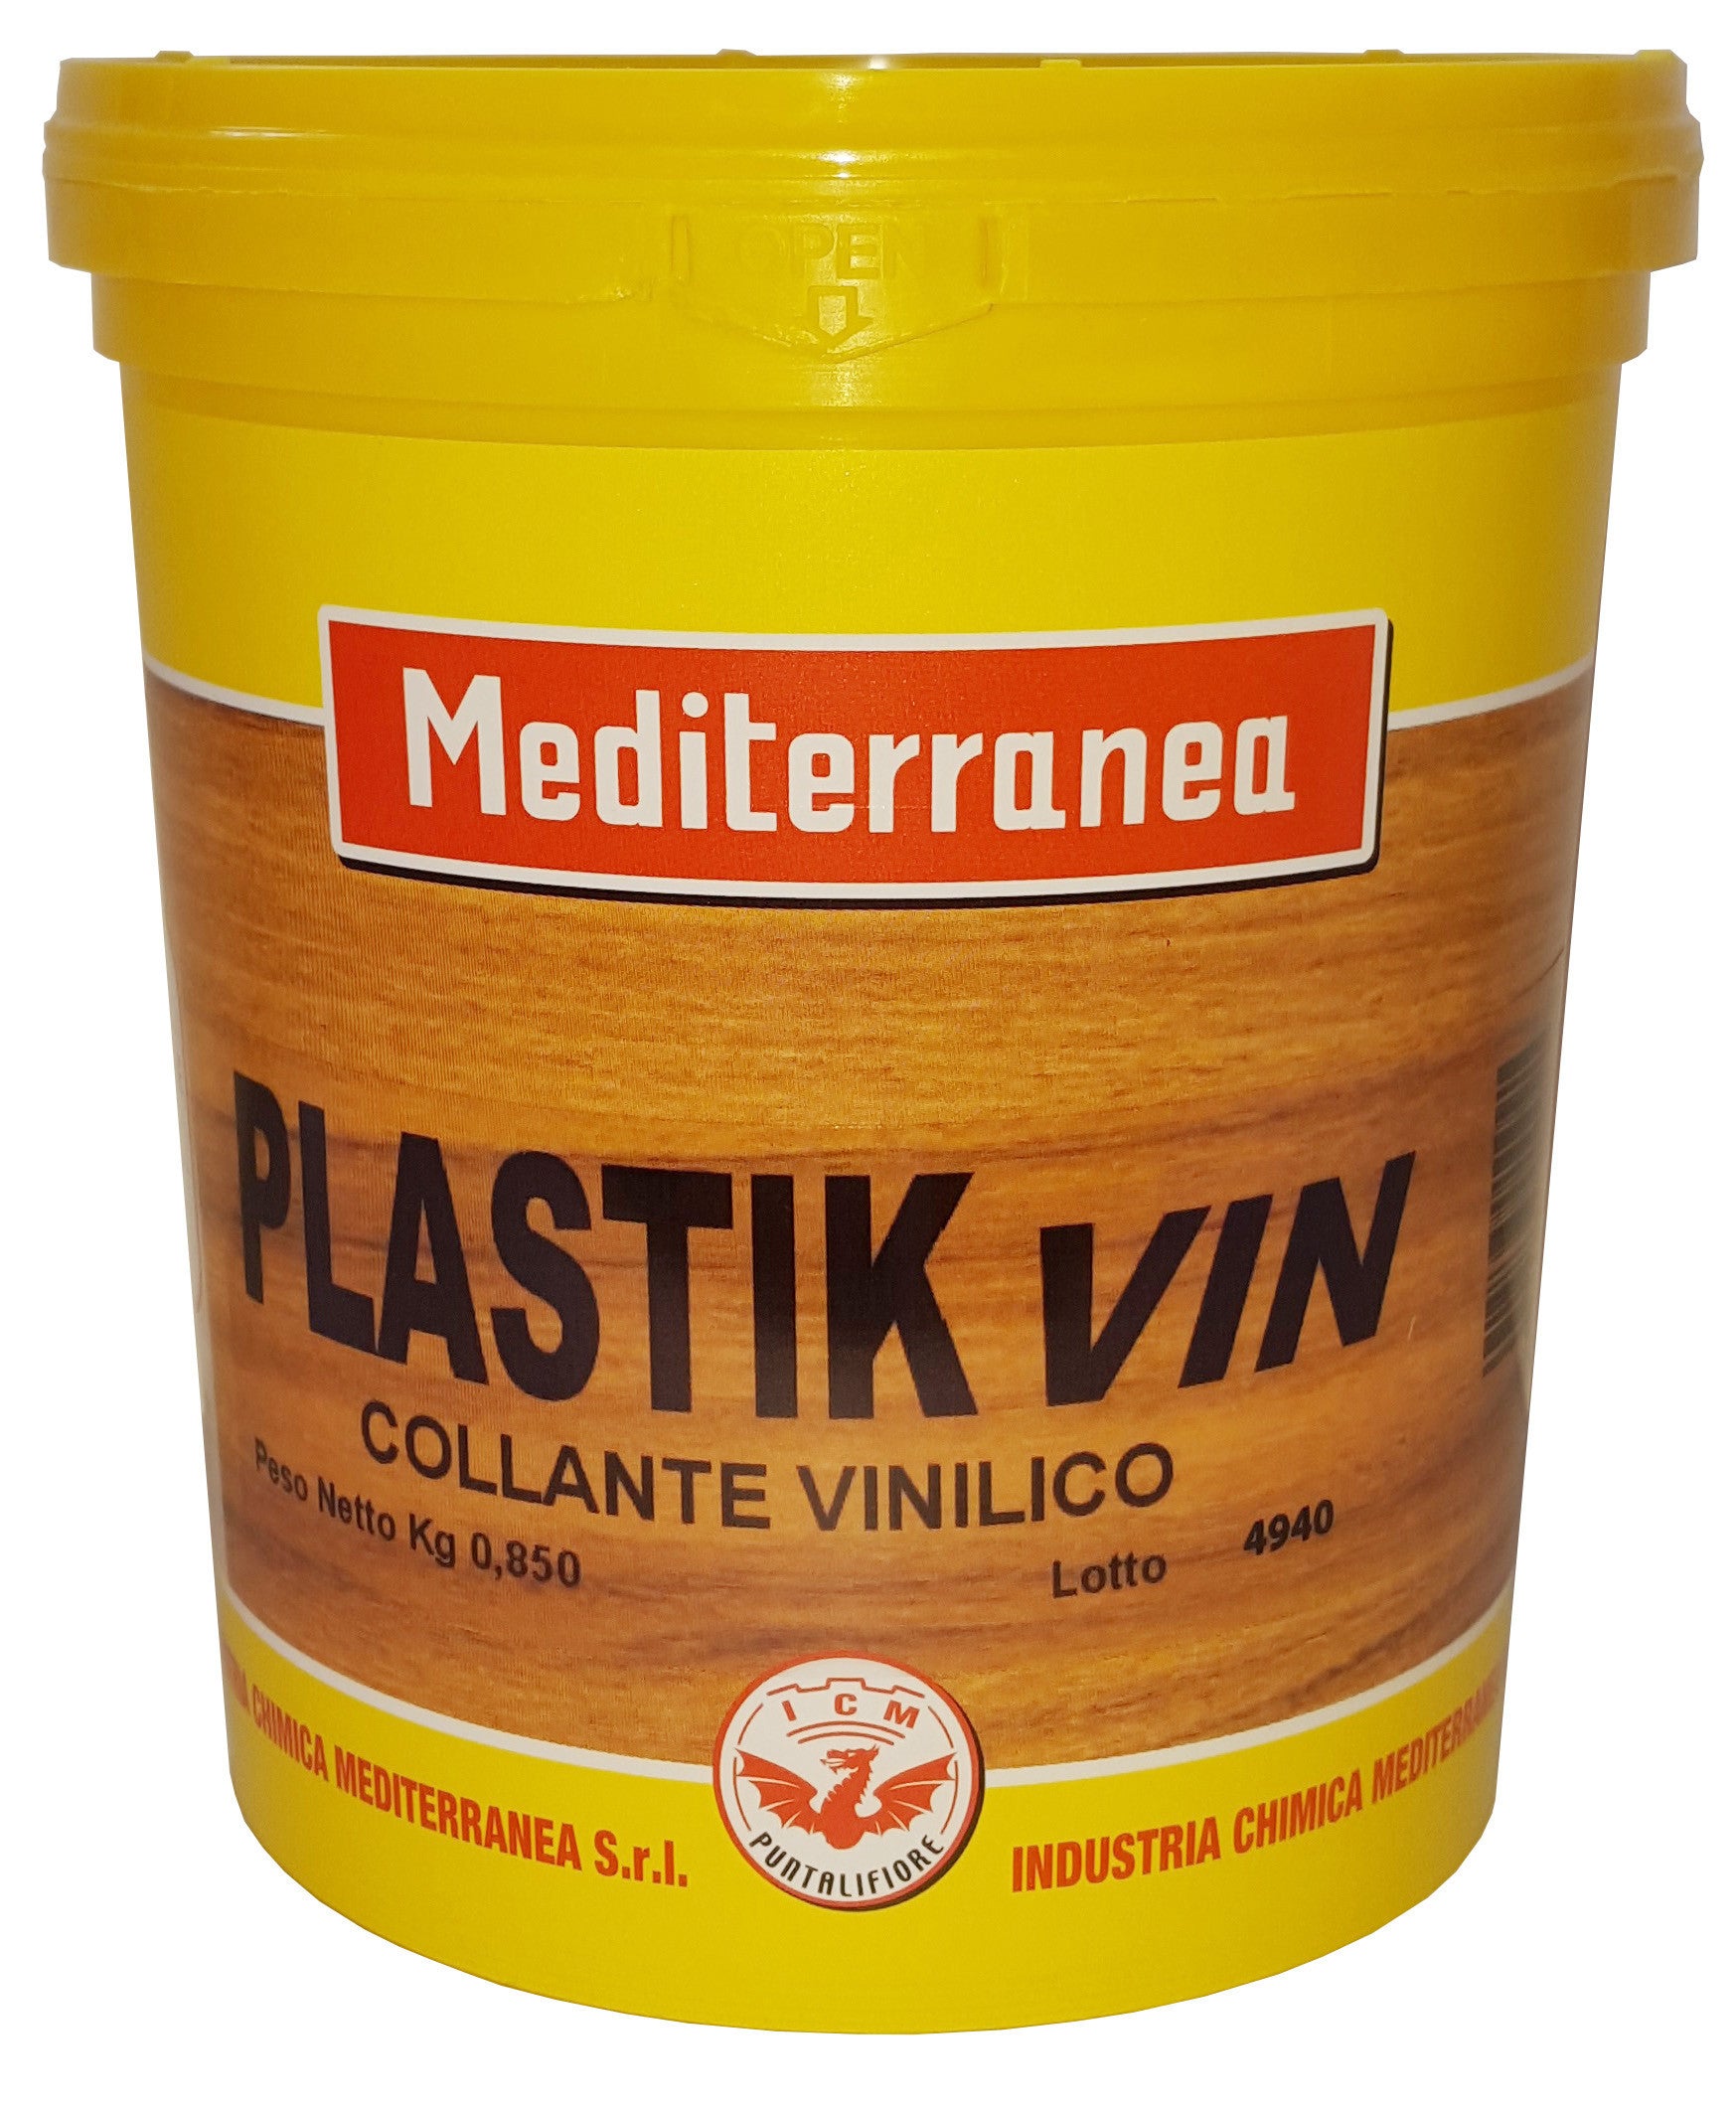 Colla vinilica plastik vin 0,850 kg INDUSTRIA CHIMICA MEDITE